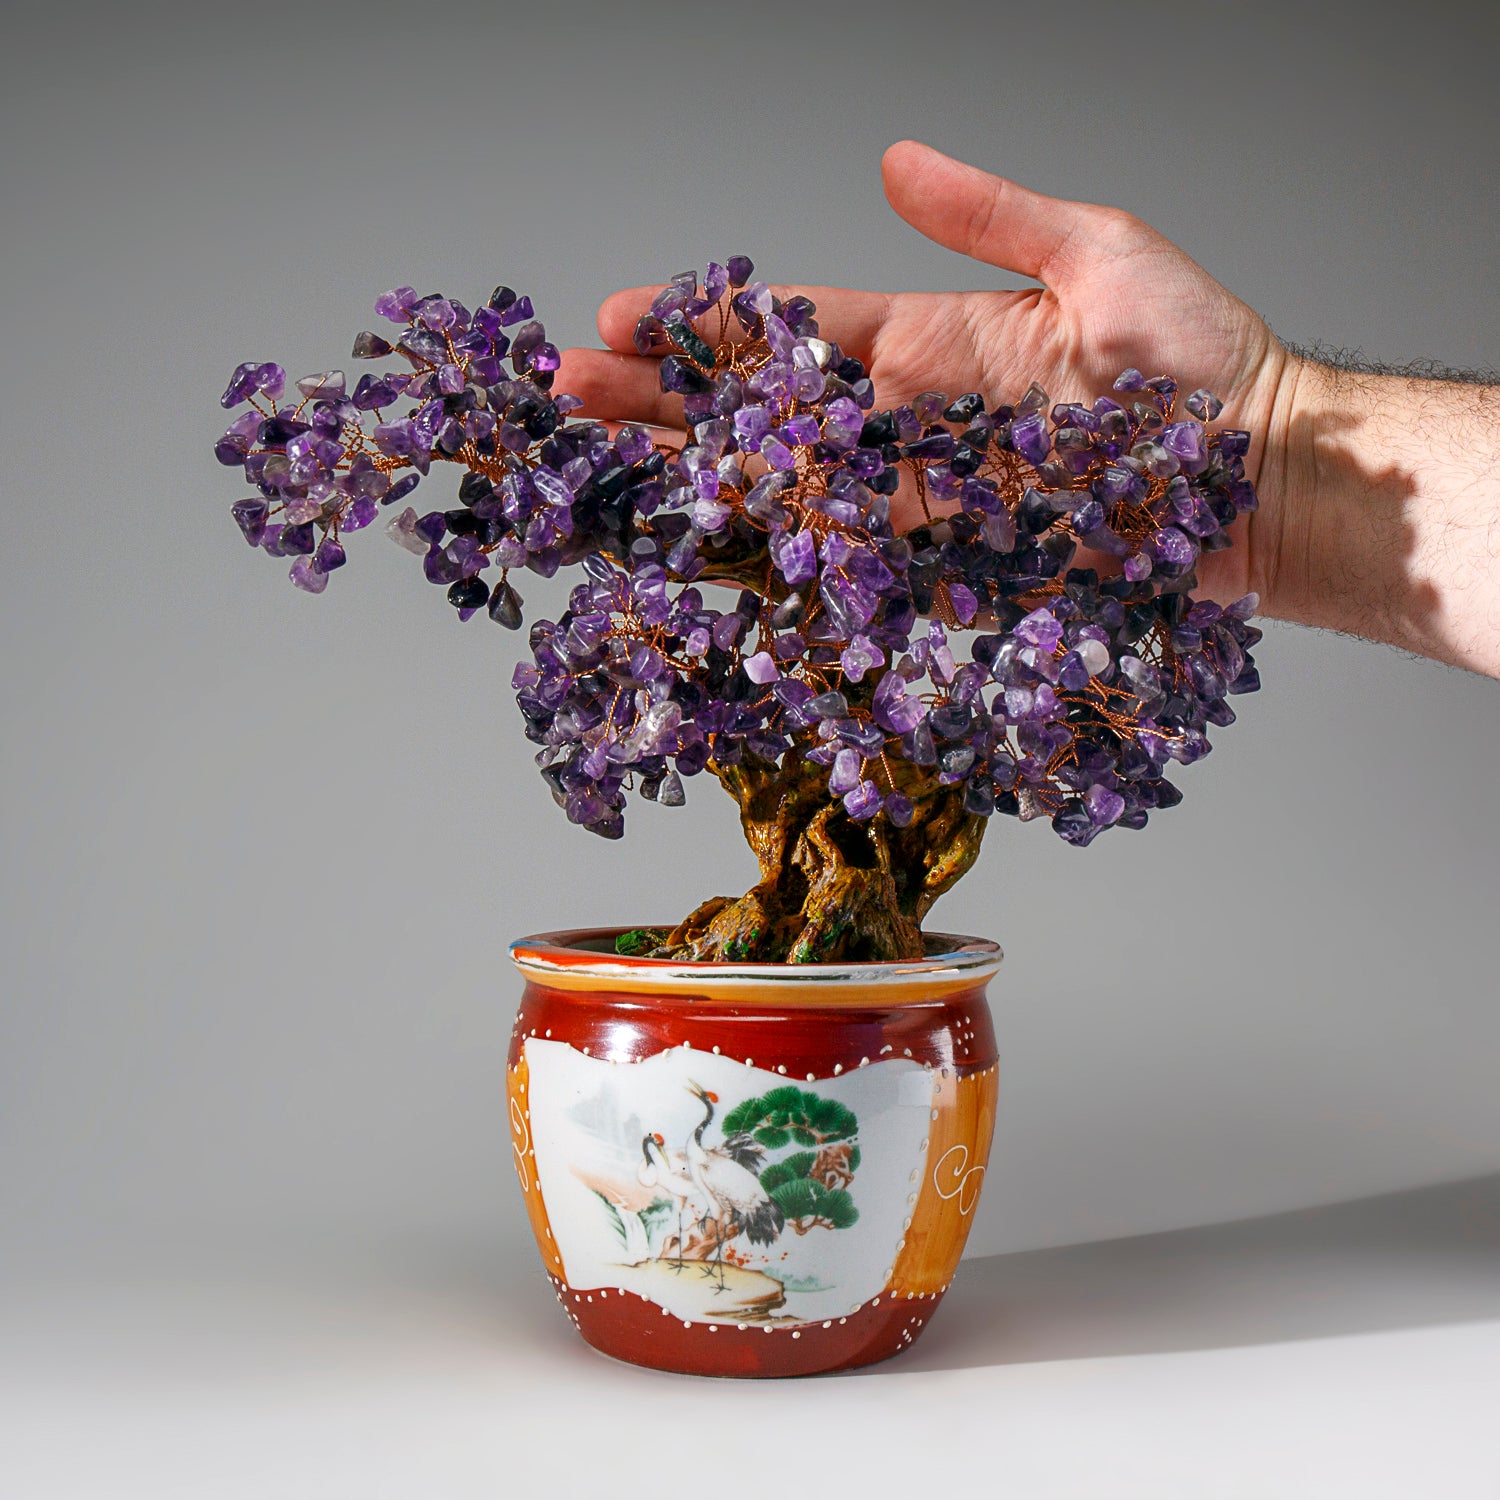 Genuine Amethyst Gemstone Bonsai Tree in Round Ceramic Pot (10” Tall)